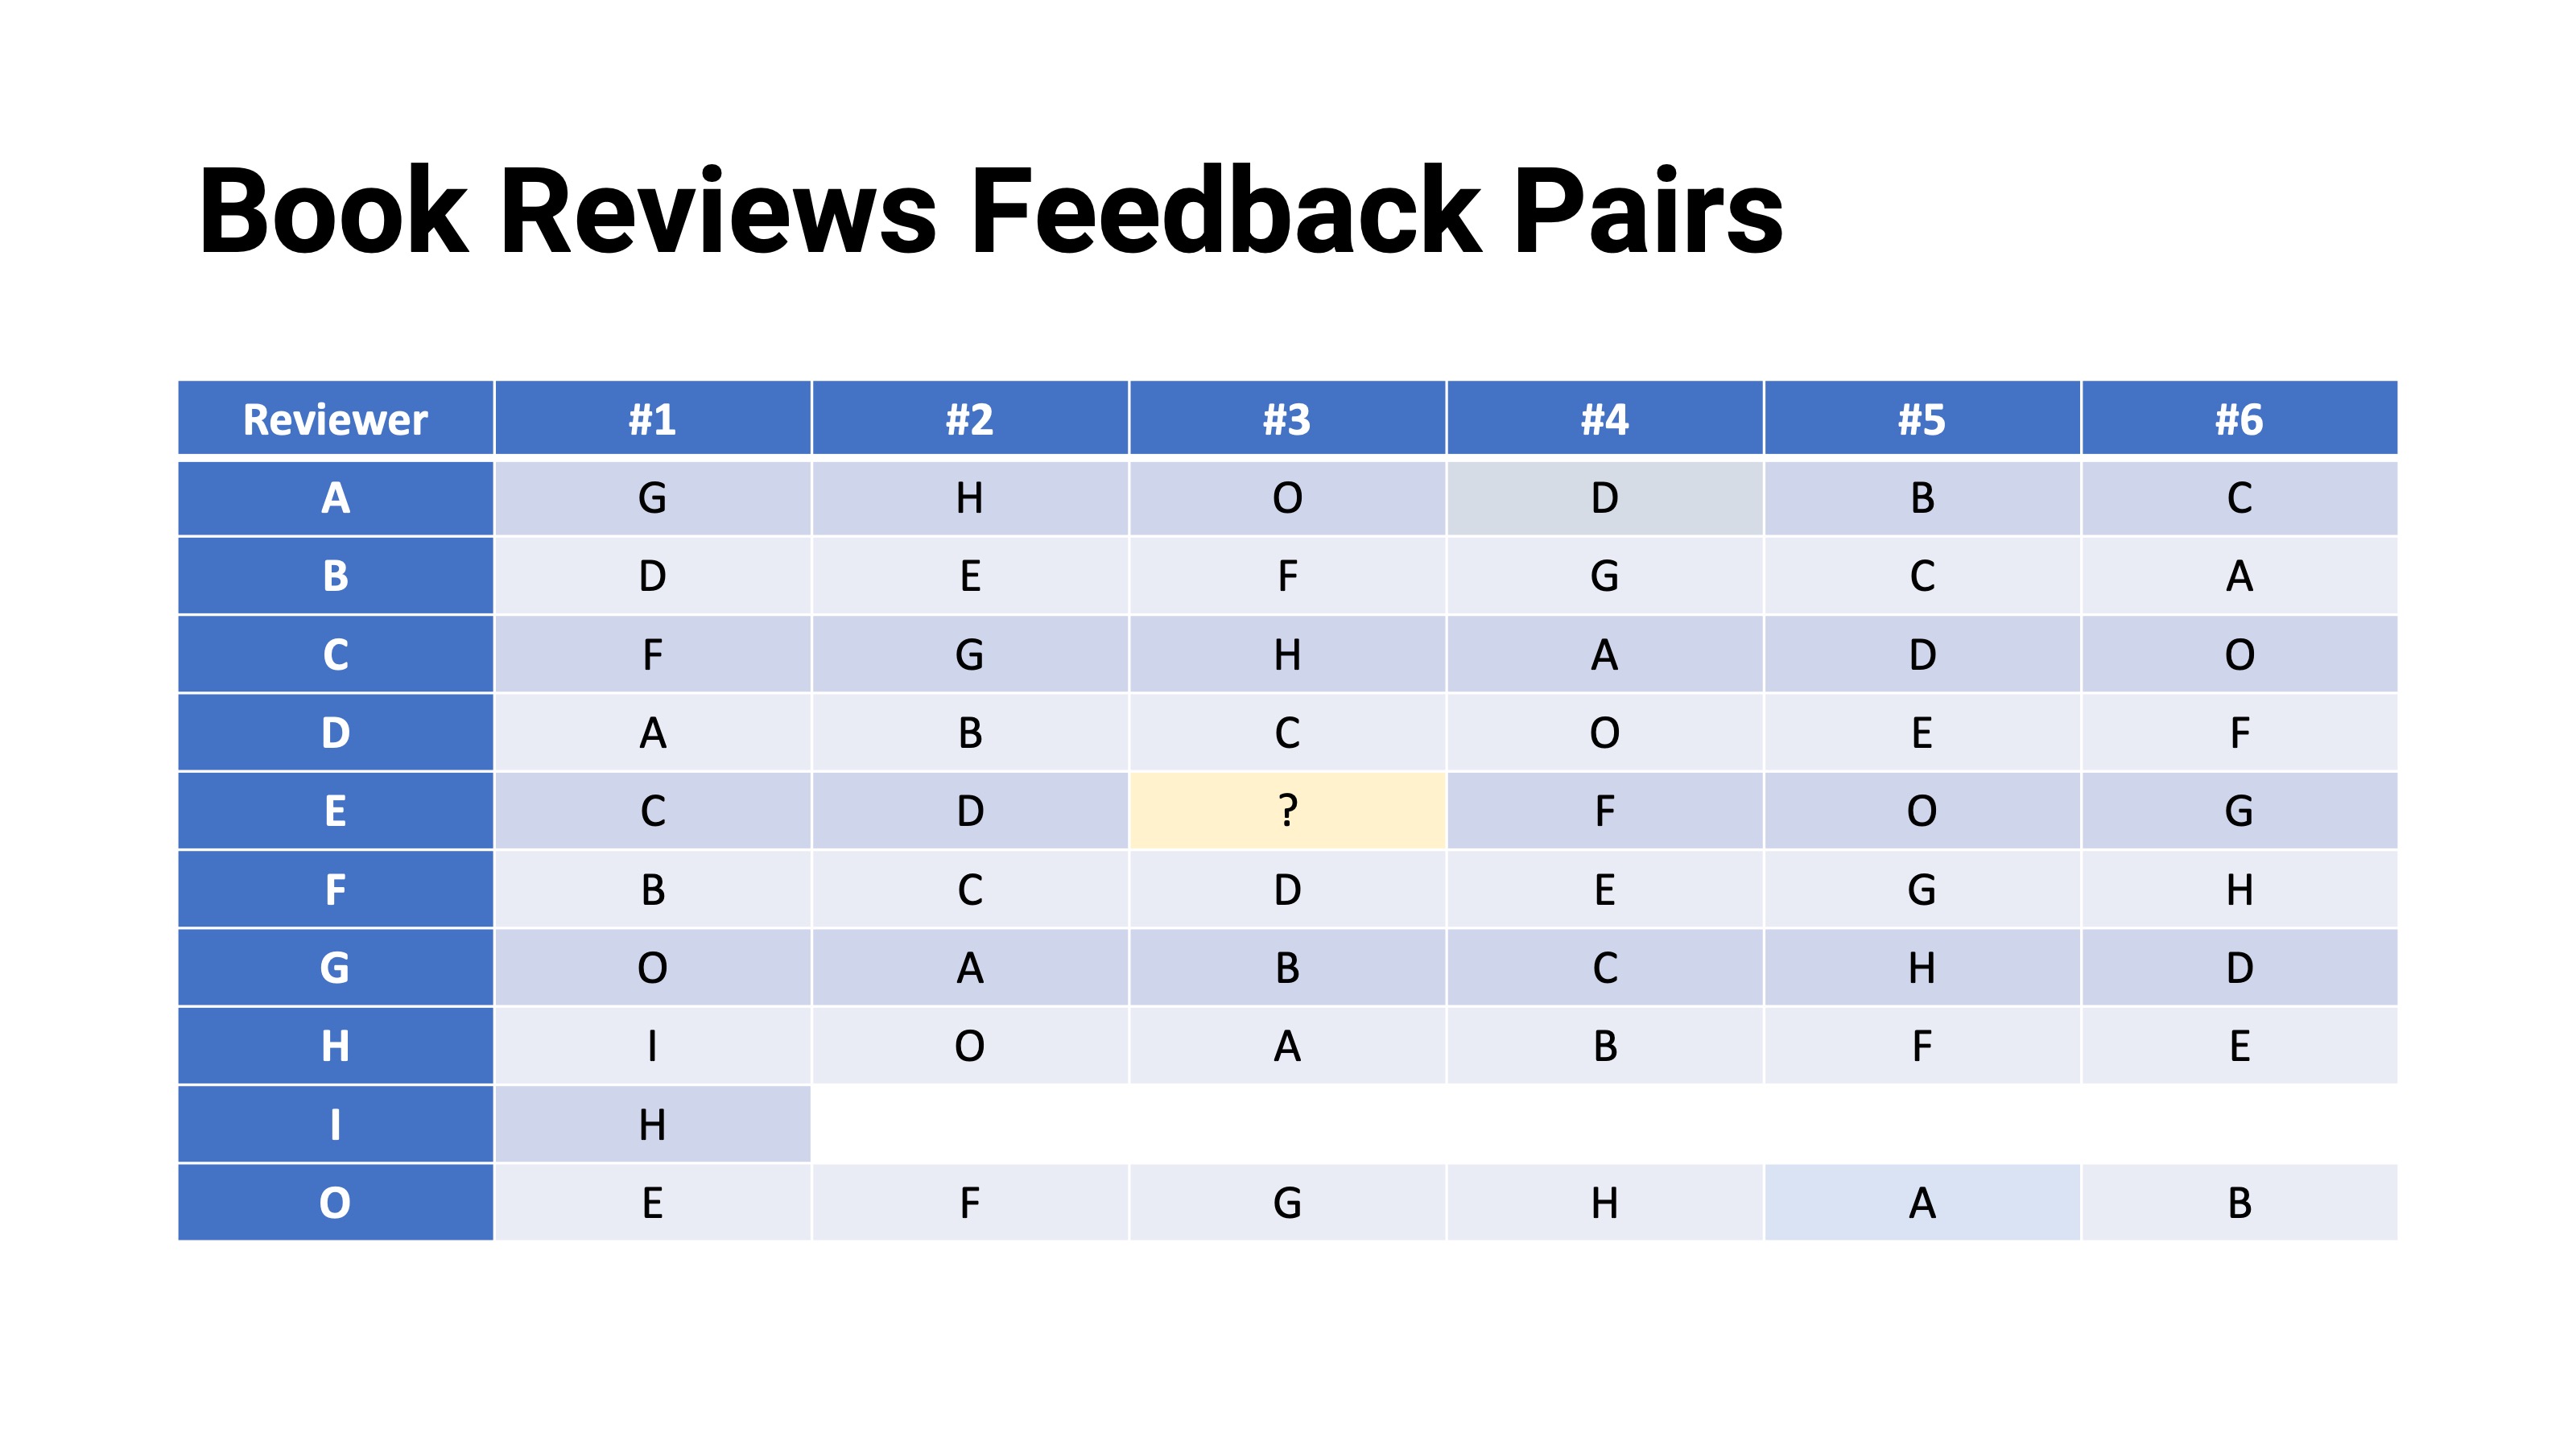 Book reviews feedback table